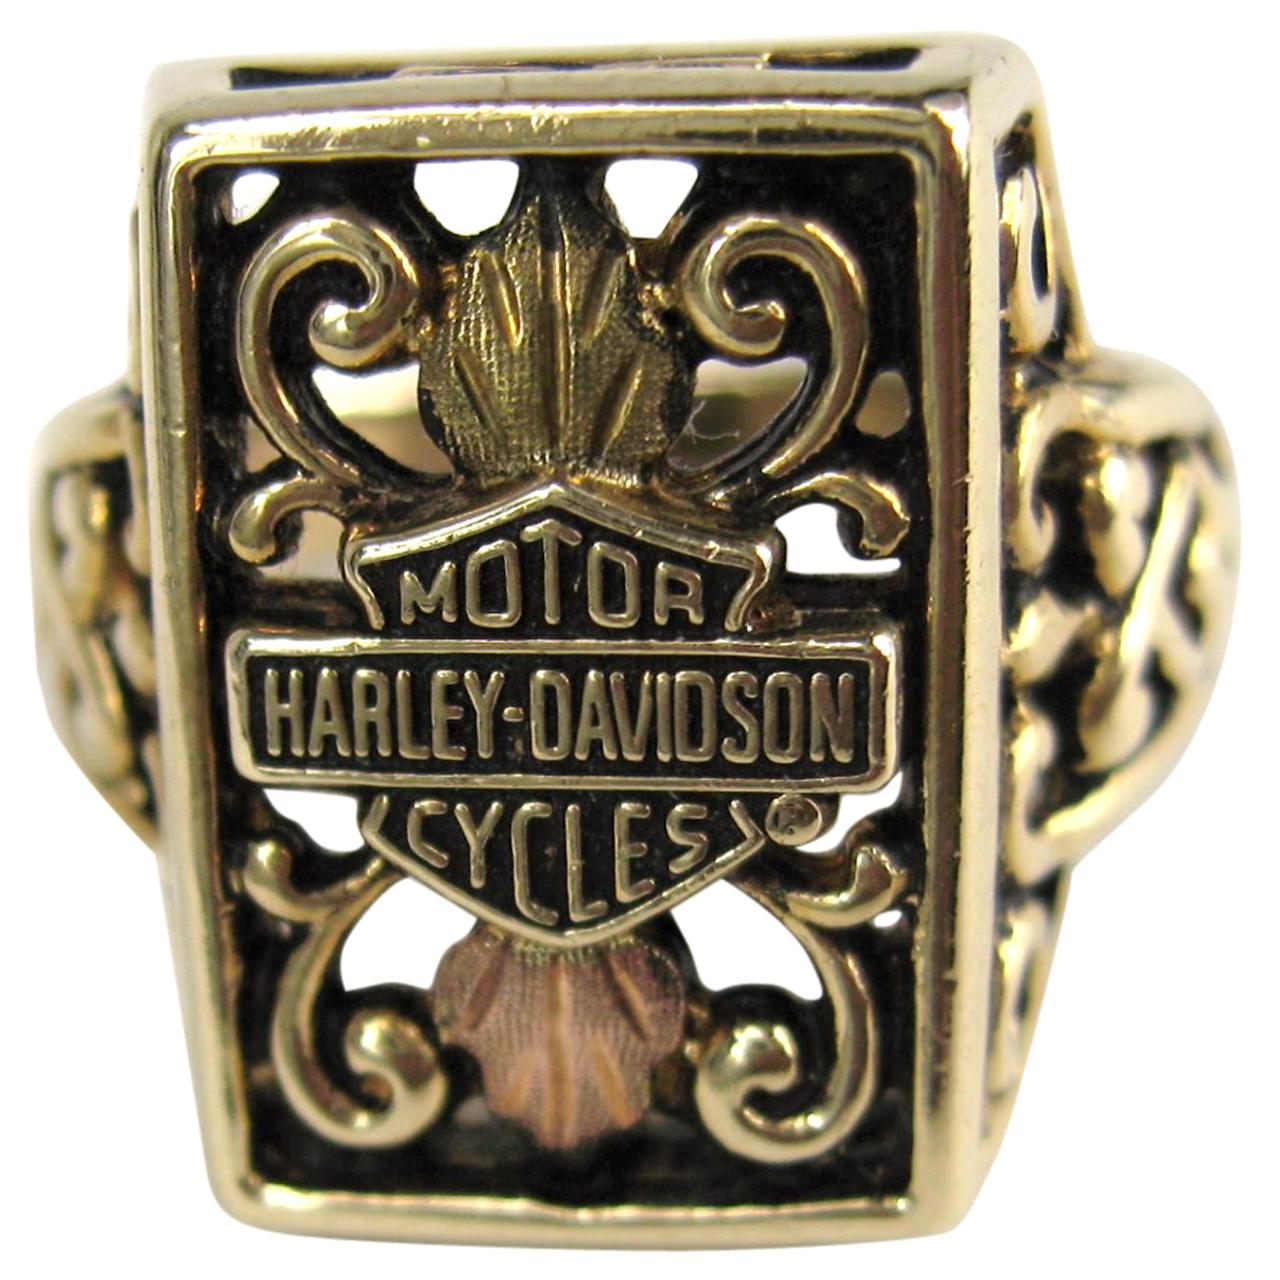 Harley Davidson jewelry Bronze